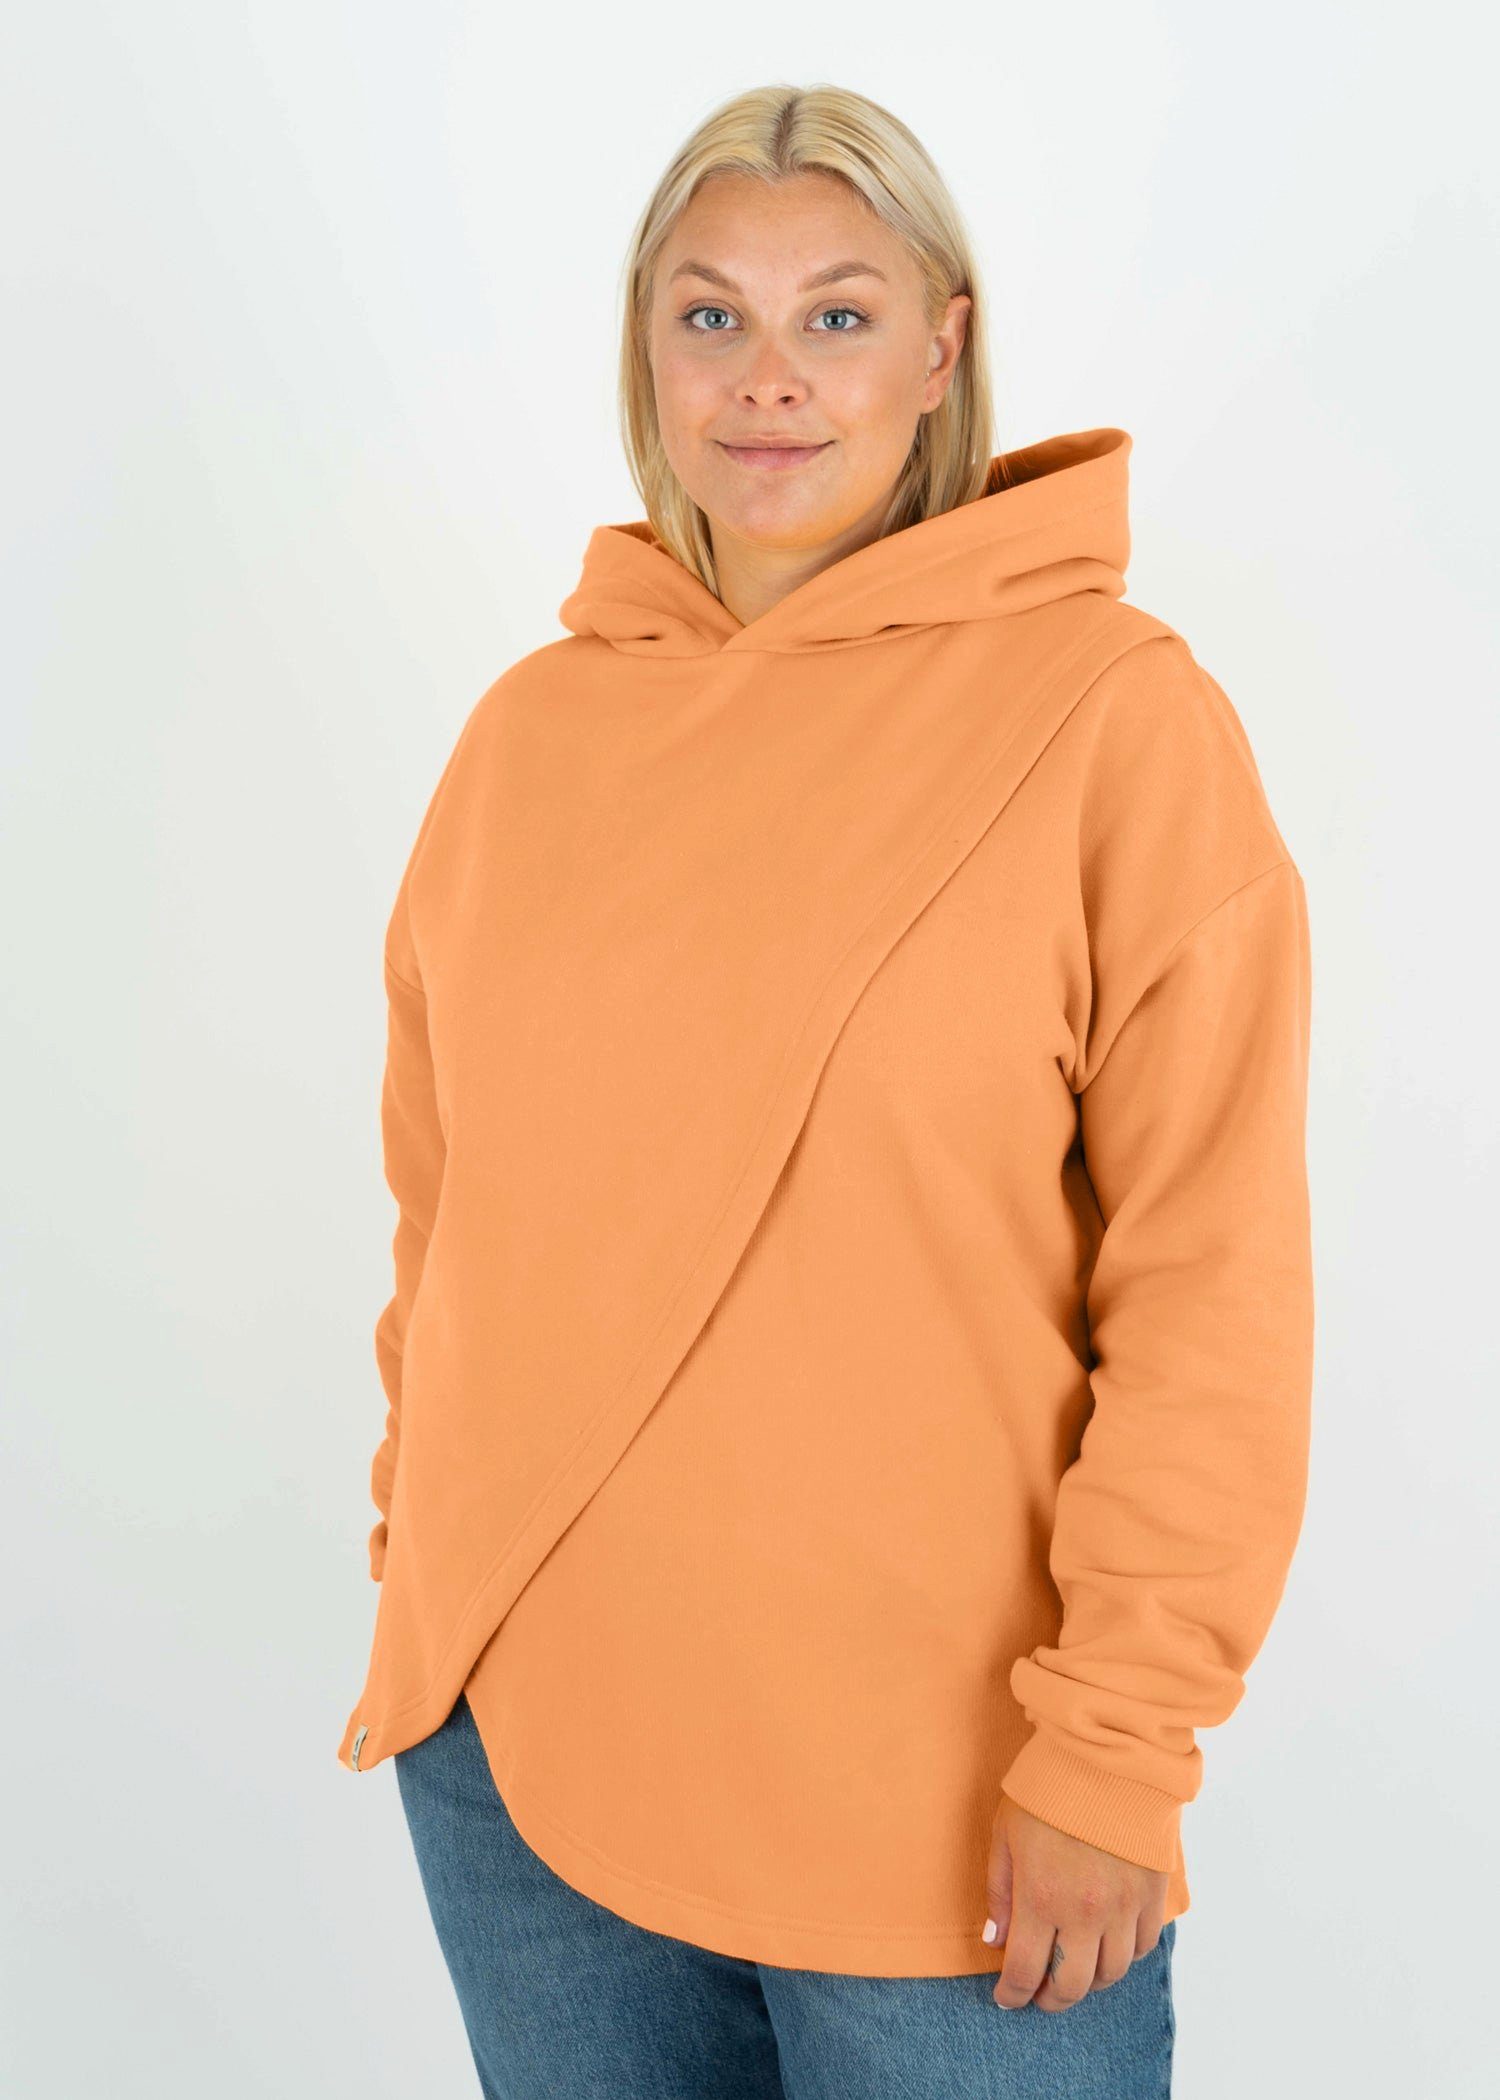 Tangerine Sweatshirt VINGER Noorlys